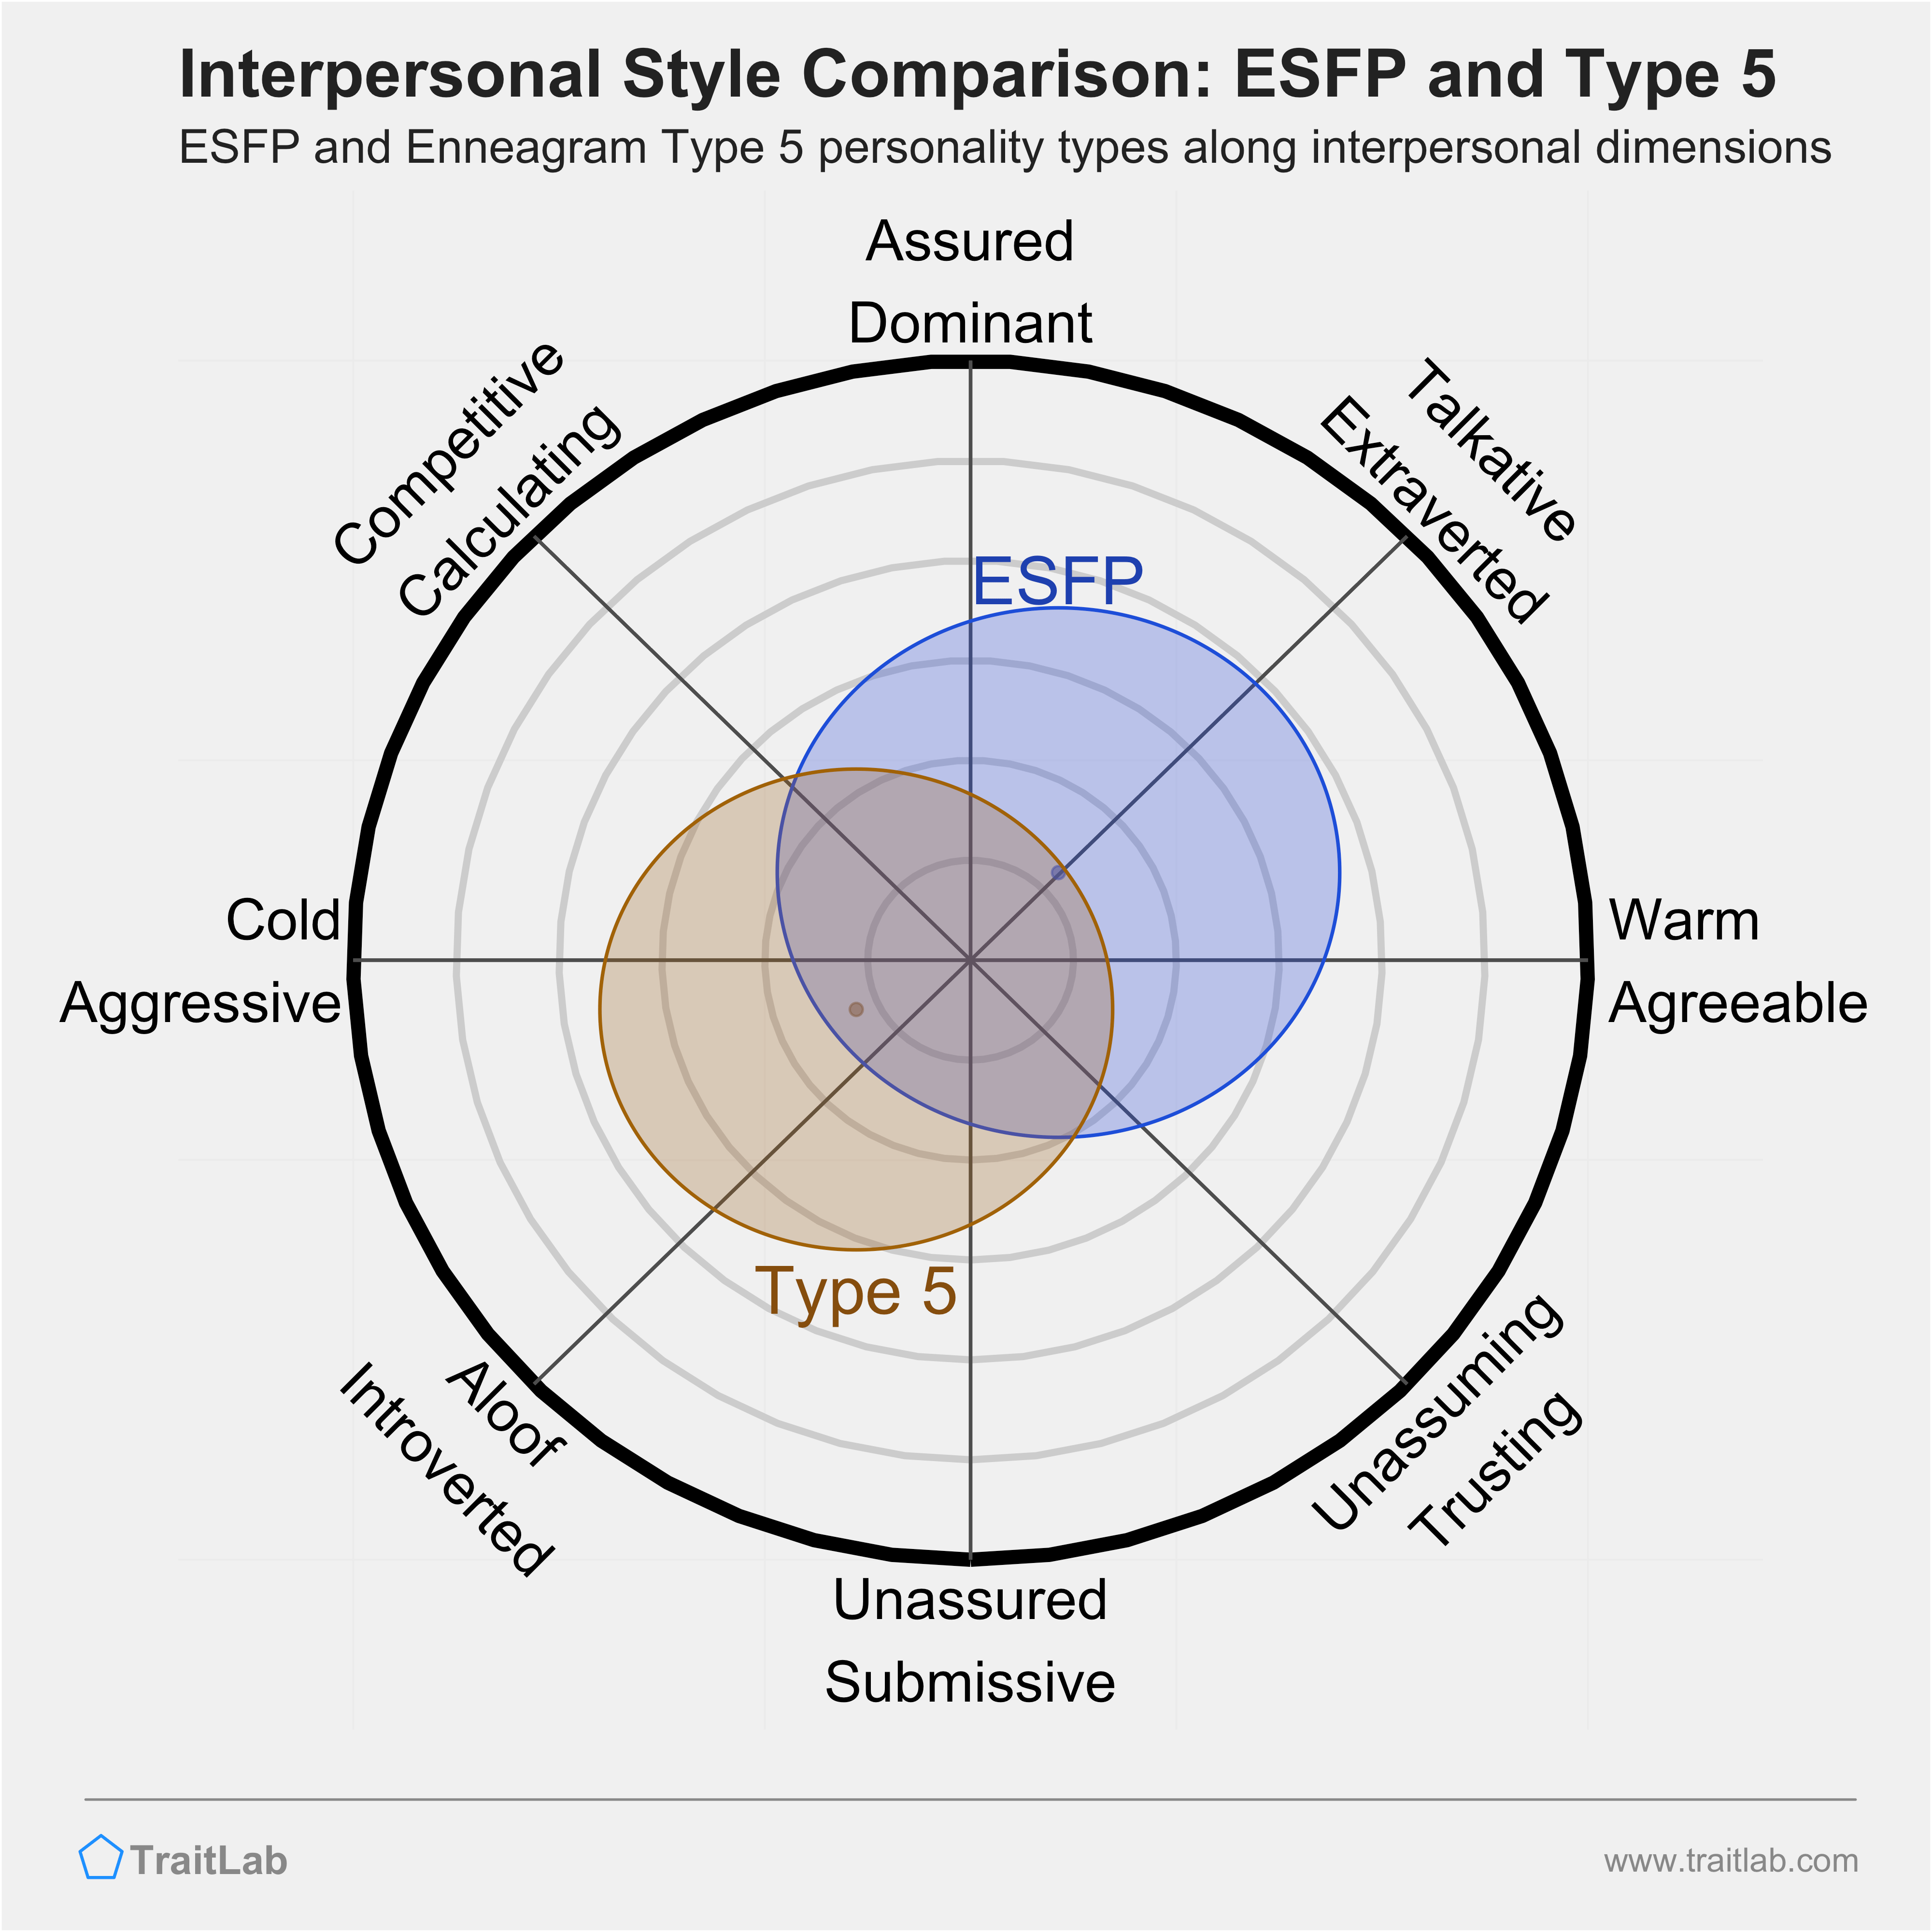 Enneagram ESFP and Type 5 comparison across interpersonal dimensions